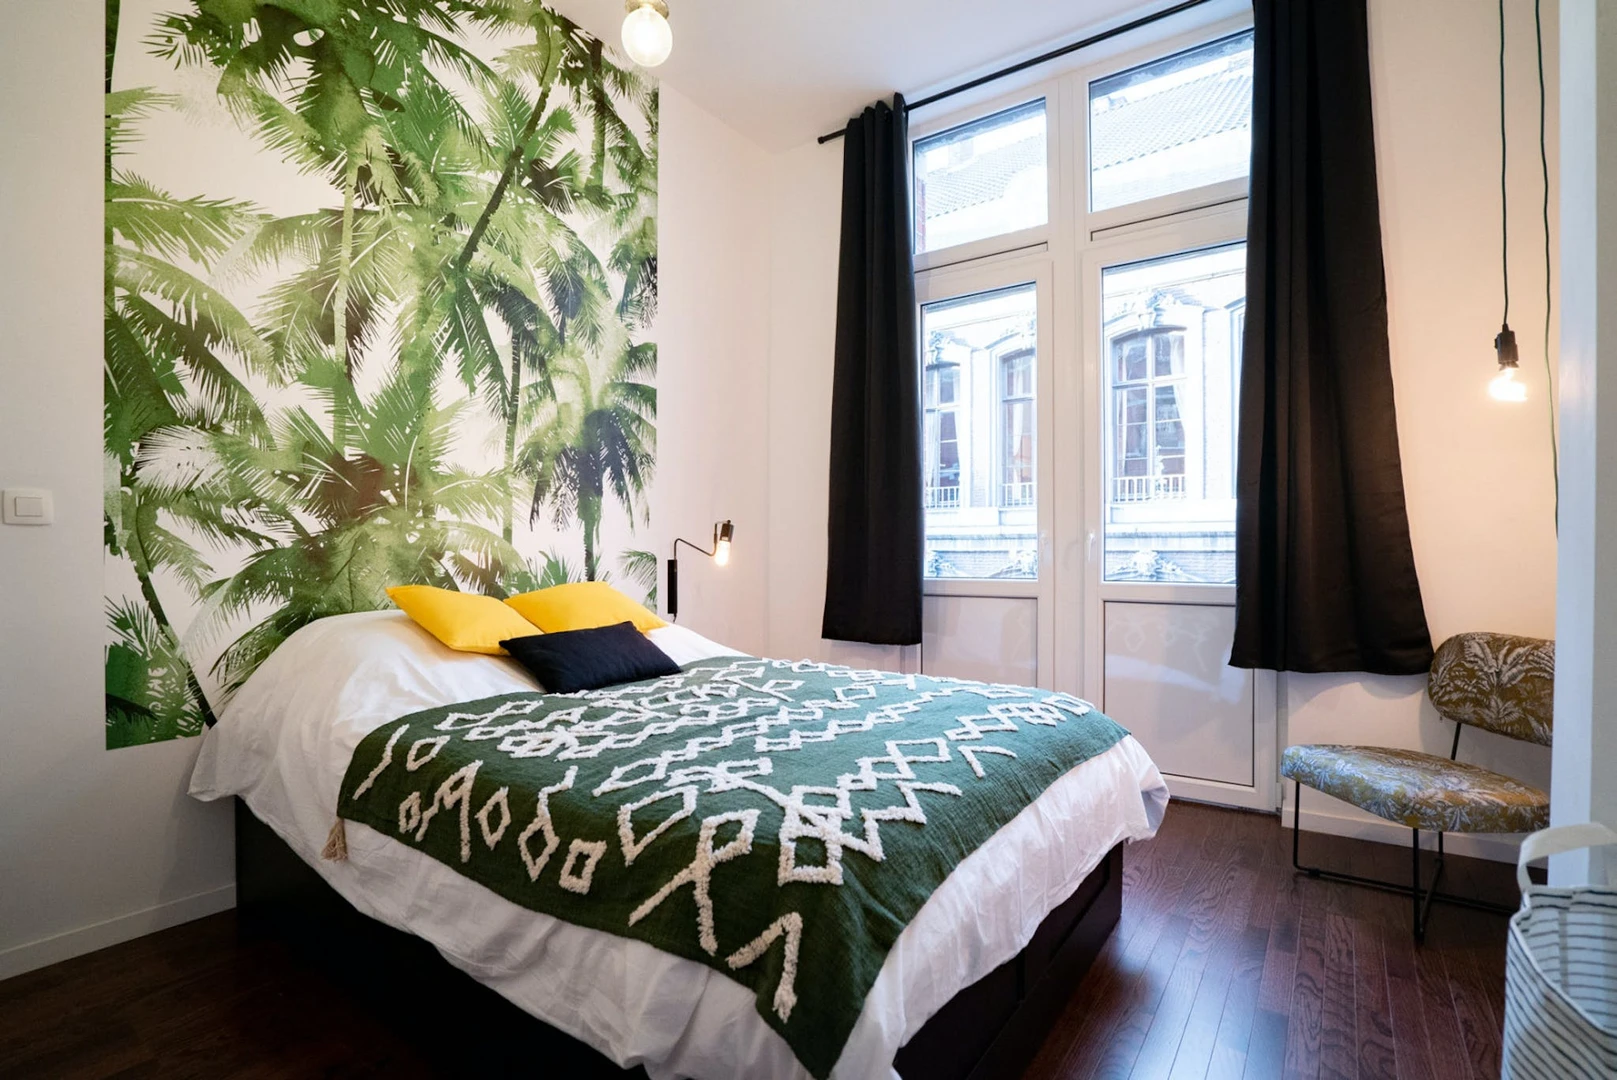 Cheap private room in Liège